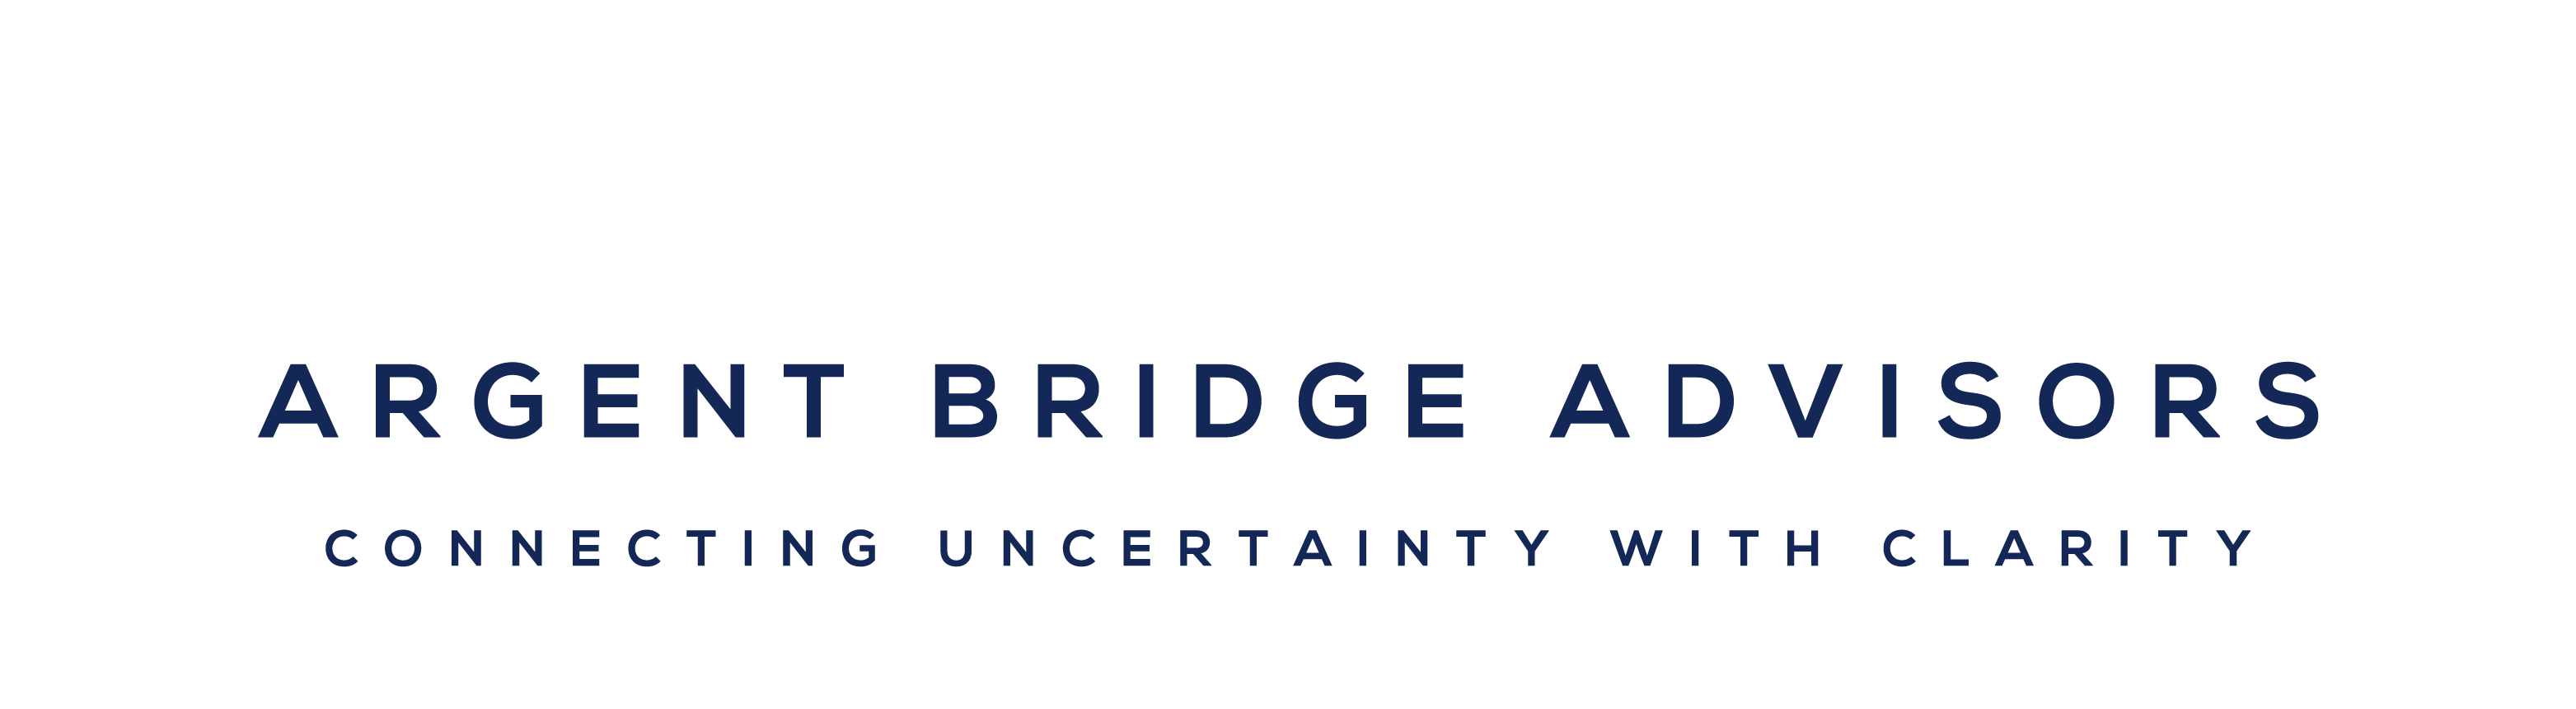 argent-bridge-advisors-logo-100120_blue grey horiz-wordsonly